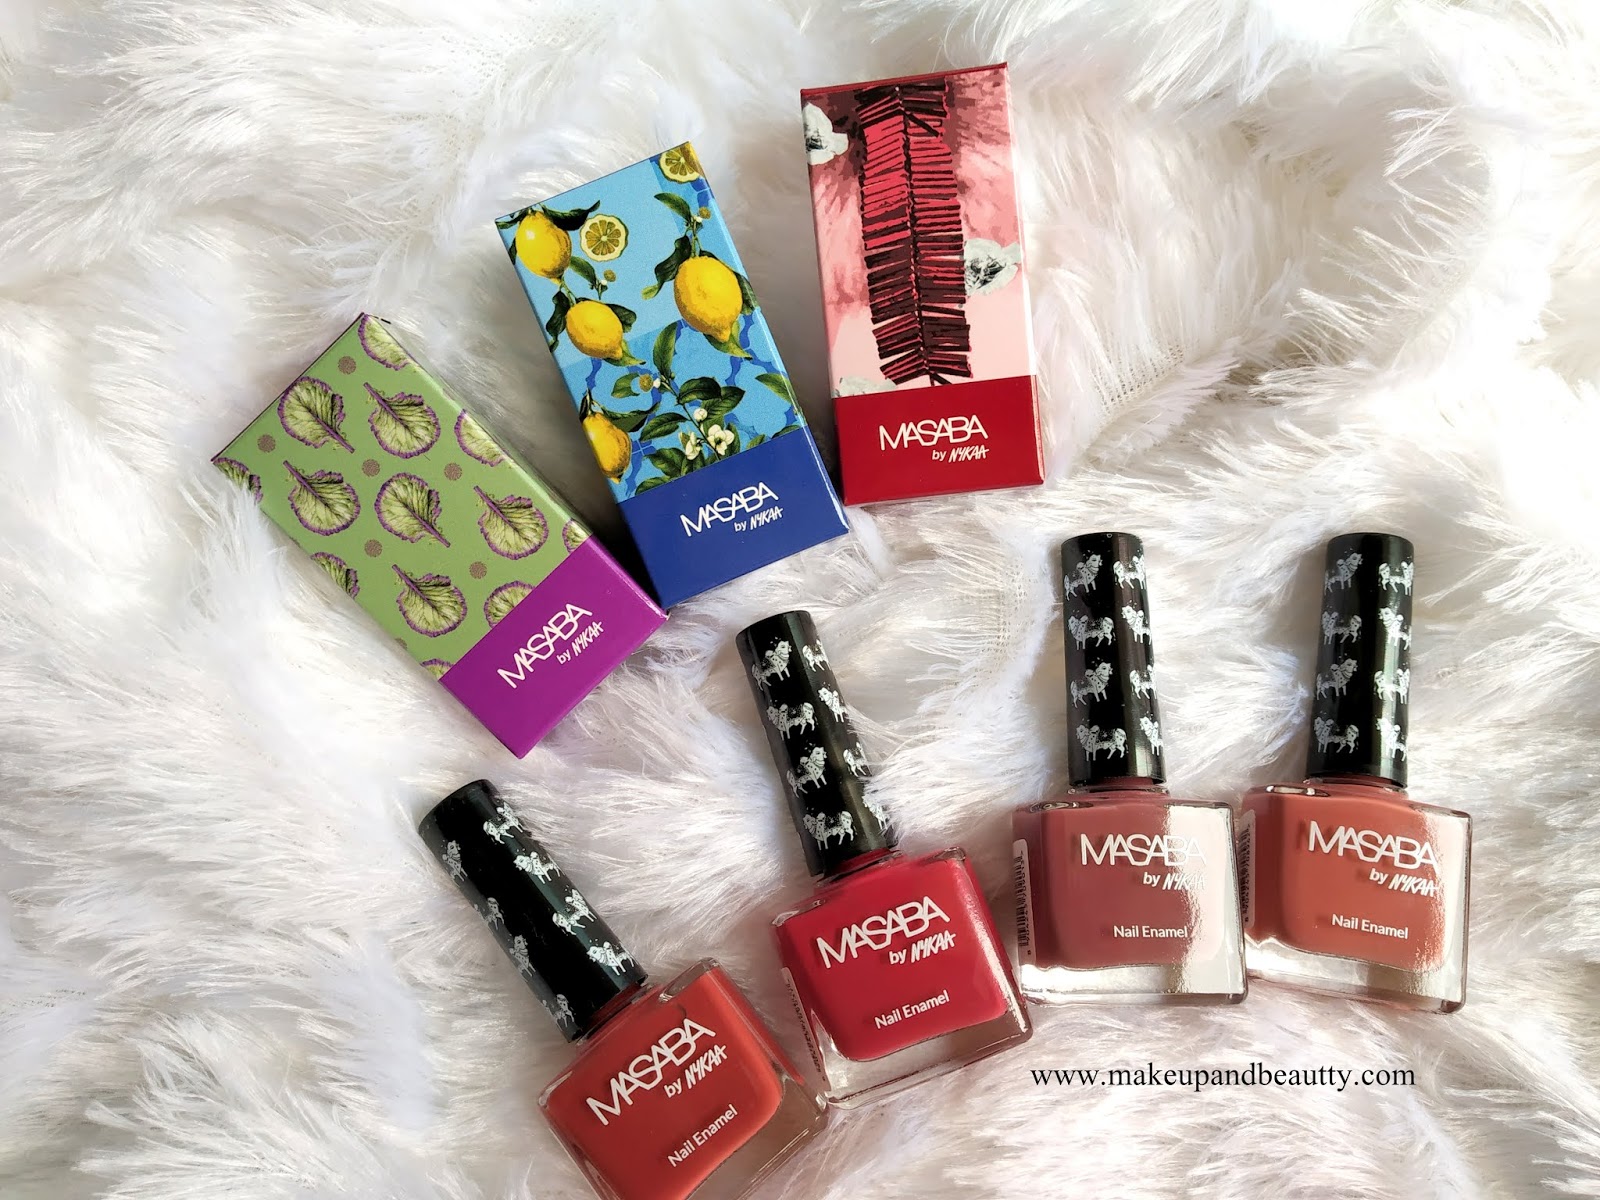 All Nykaa nailpolishes review and swatches | Color club nail polish, Nail  polish, Best makeup products